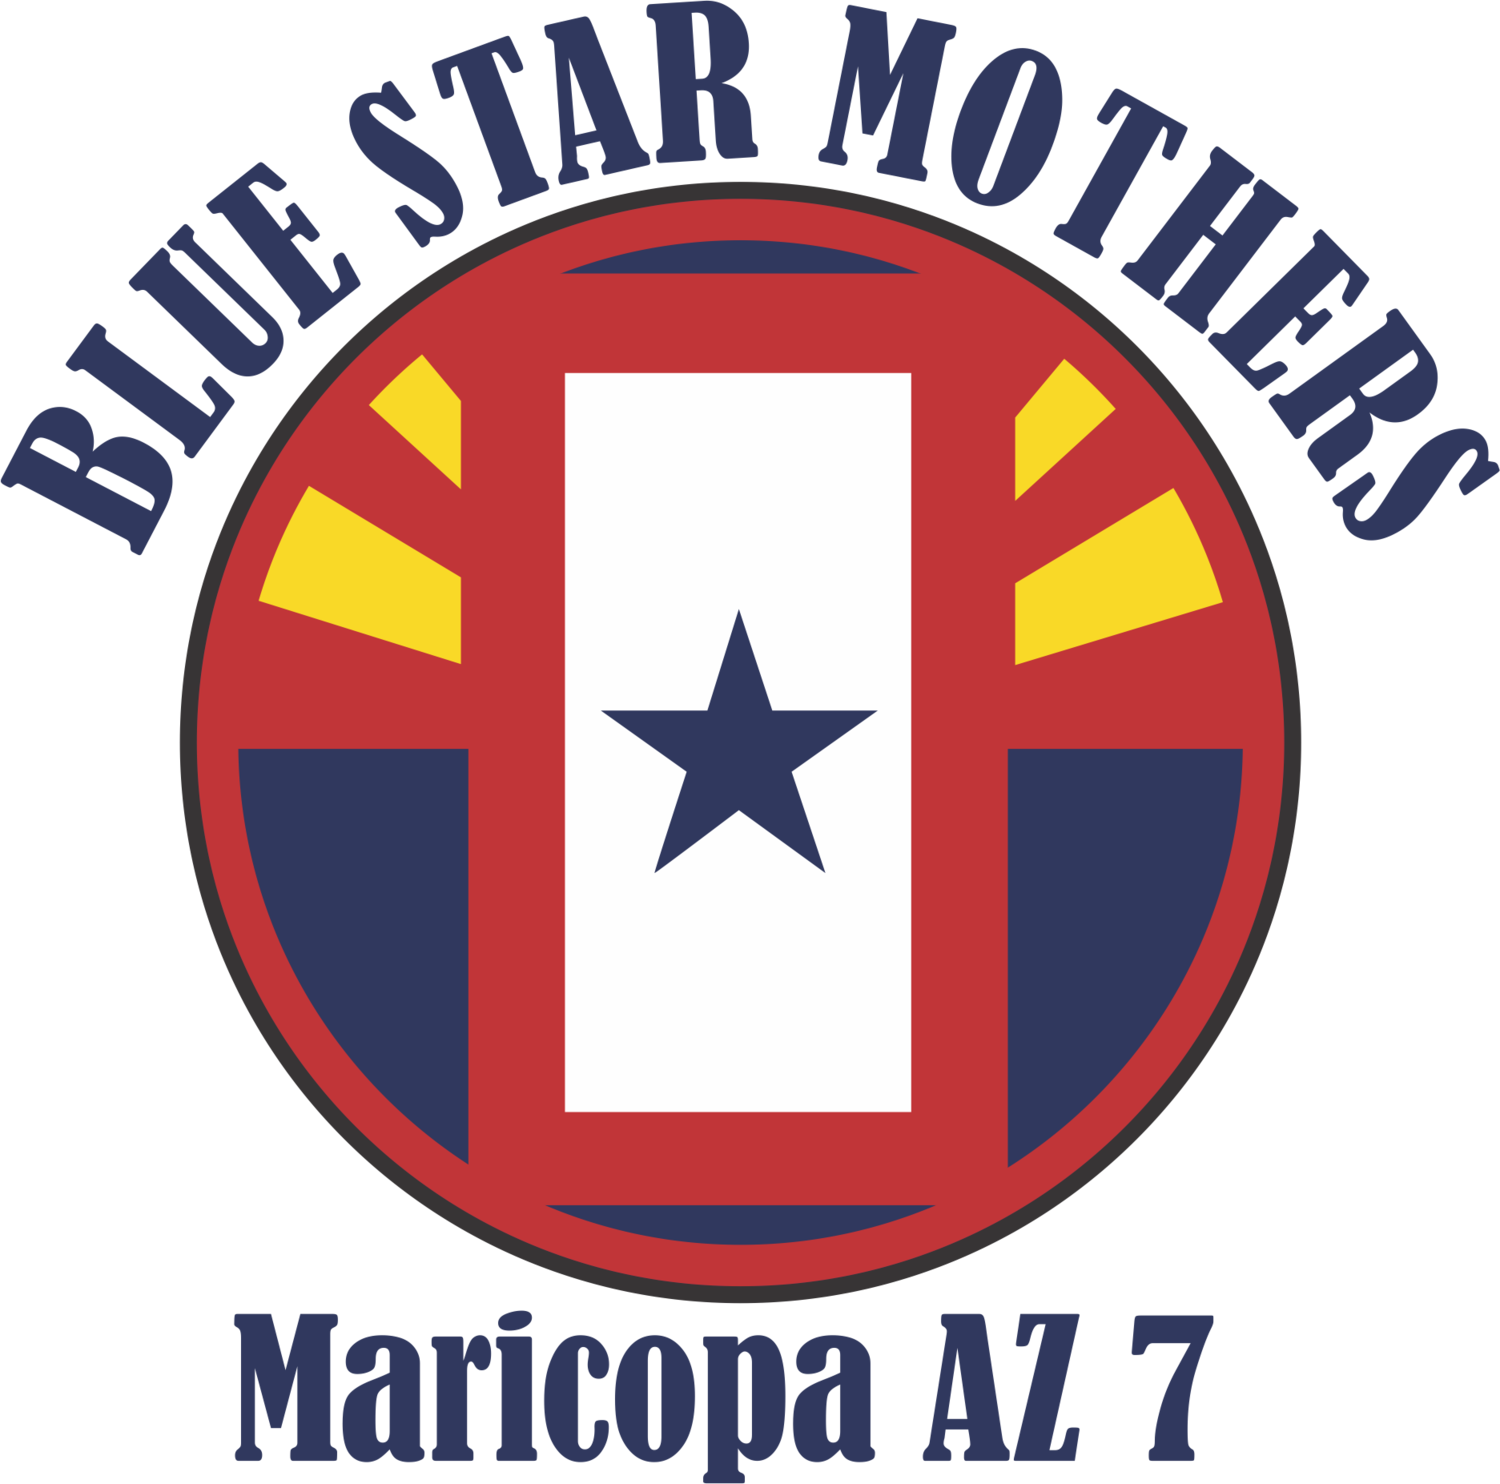 Blue Star Mothers of Maricopa AZ 7